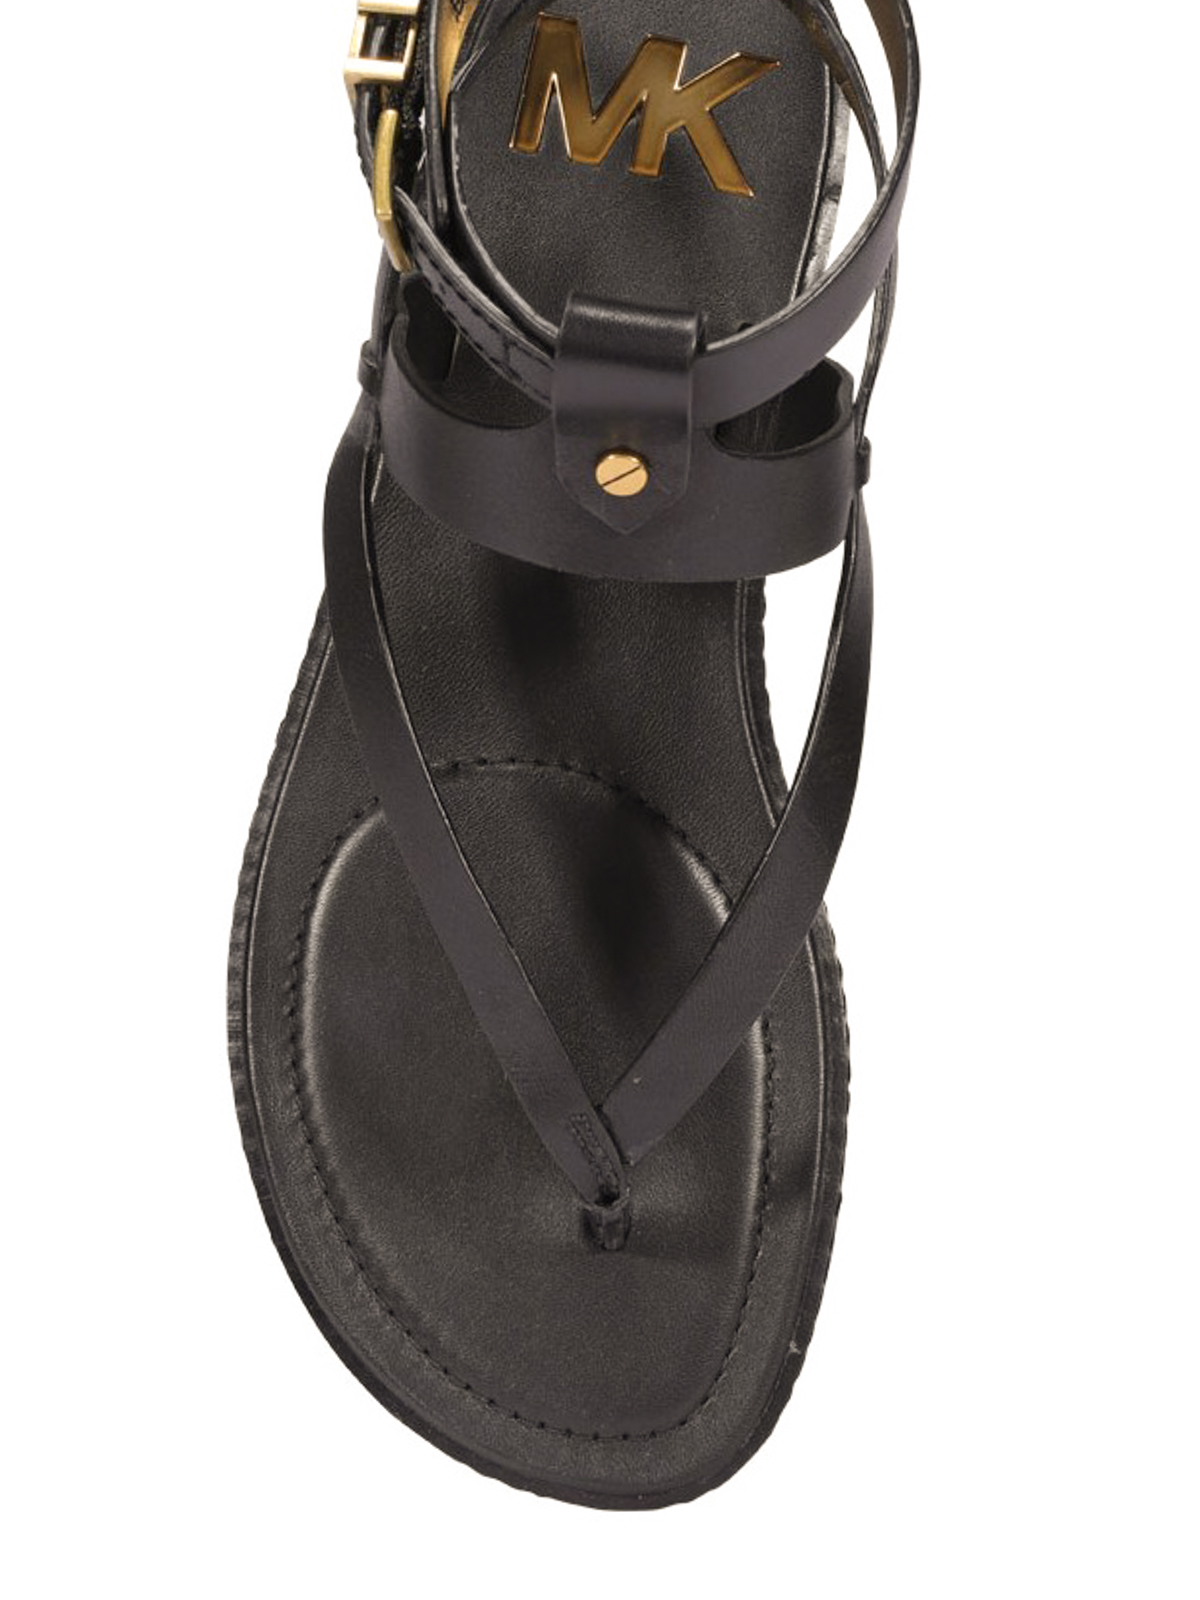 Verstrooien Tochi boom gemak Sandals Michael Kors - Pearson sandals - 40S0PEFA1L001 | iKRIX.com